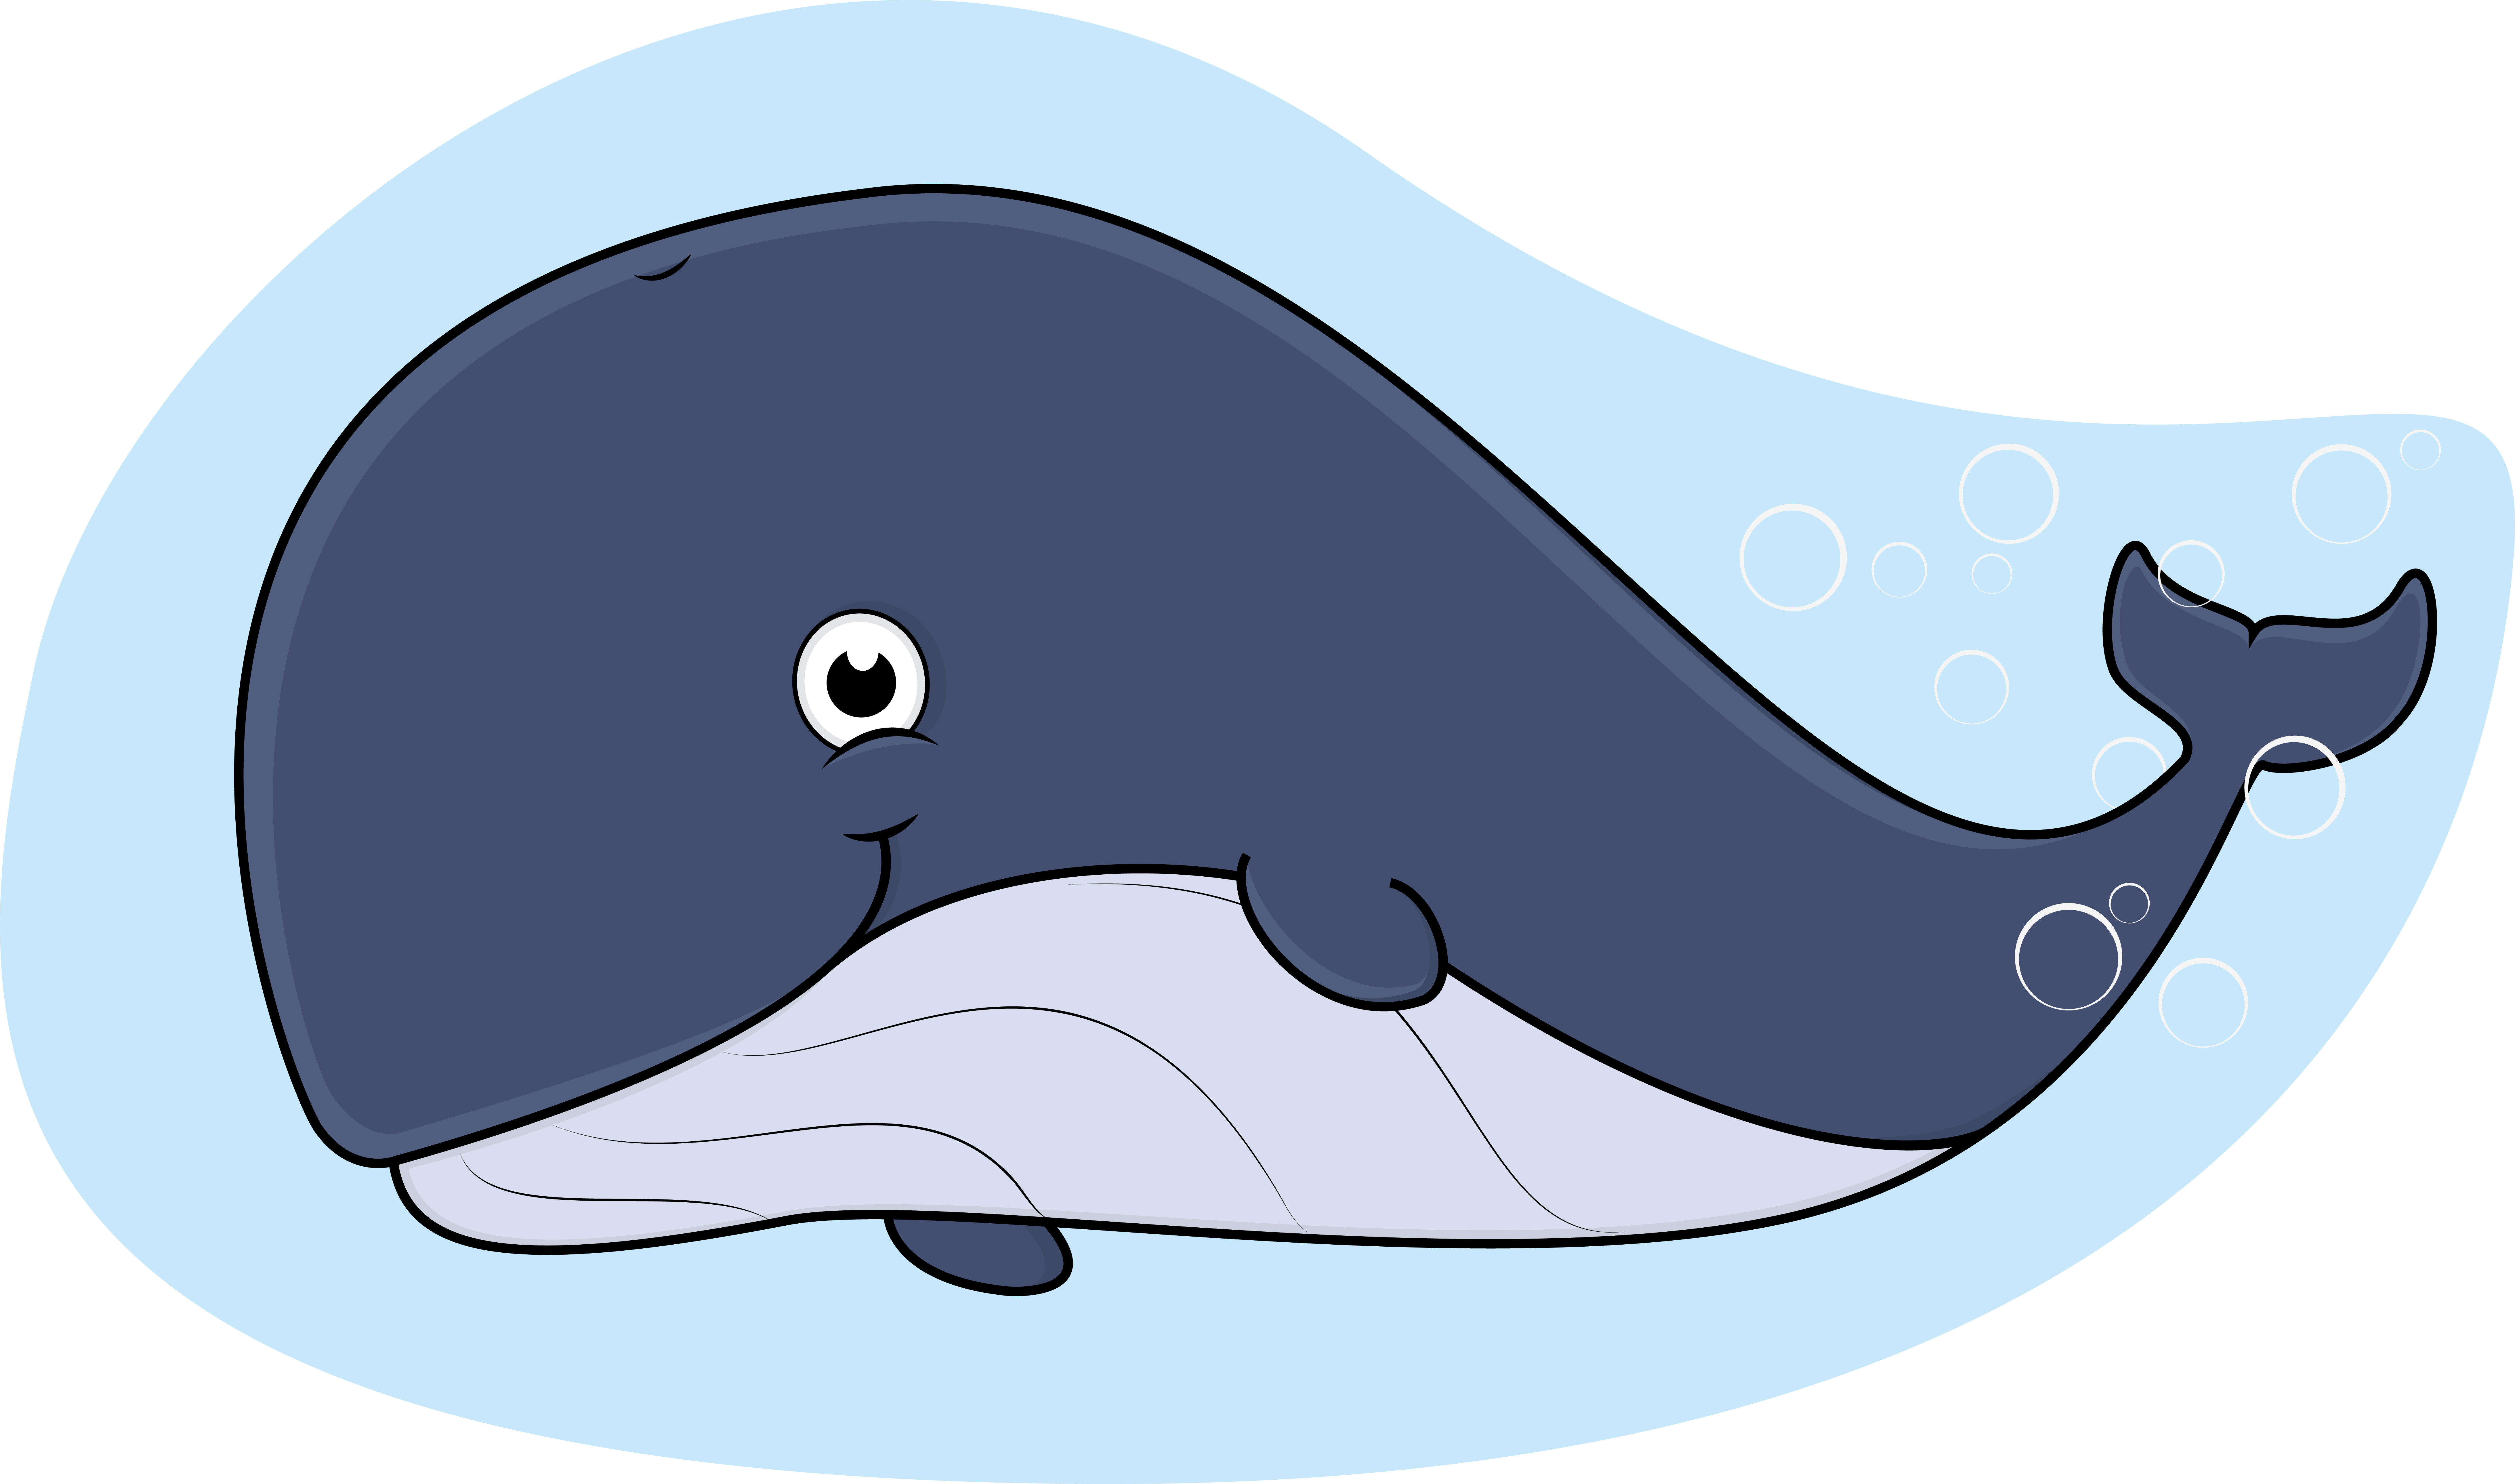 Happy Whale cartoon - Download Free Vectors, Clipart ...